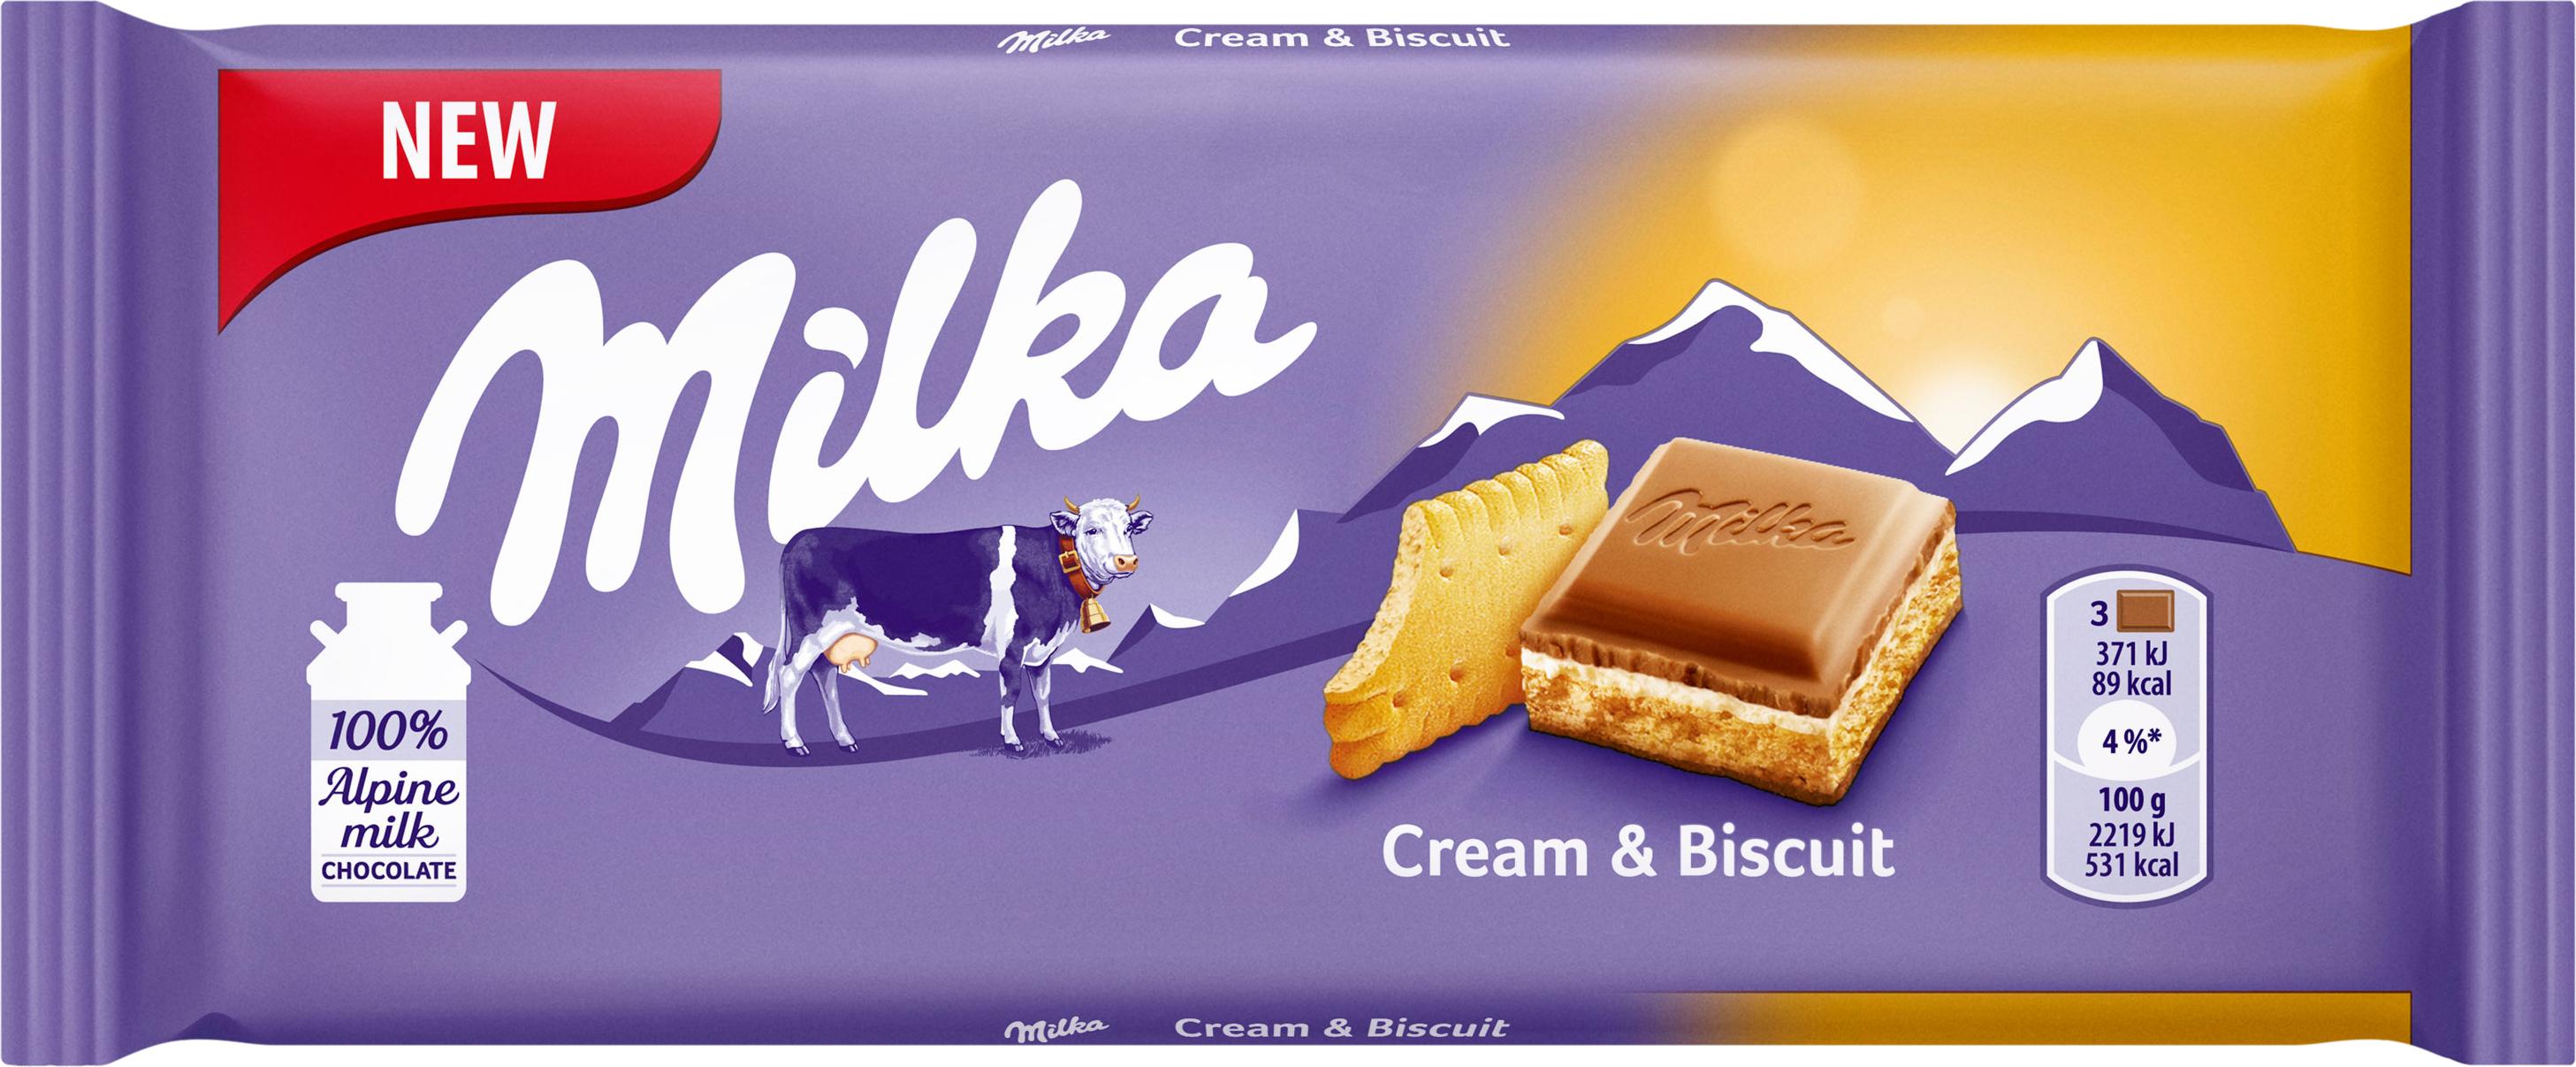 Slika za Čokolada Milka cream&biscuit 100g